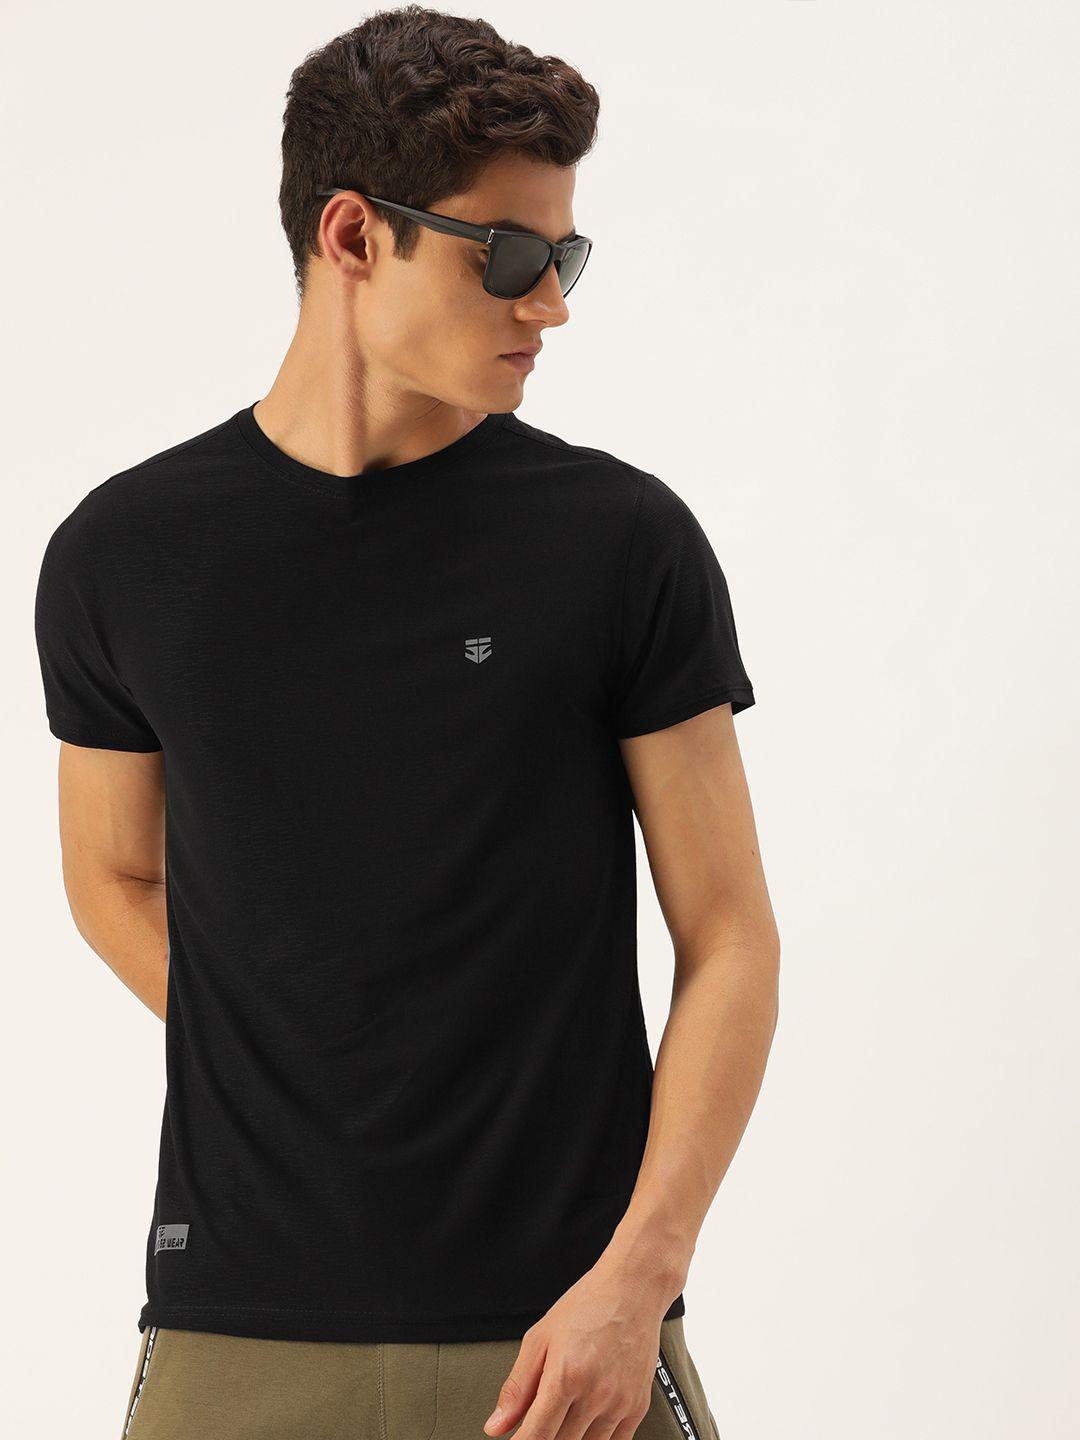 sports52 wear men black solid round neck brand logo applique dry fit training t-shirt